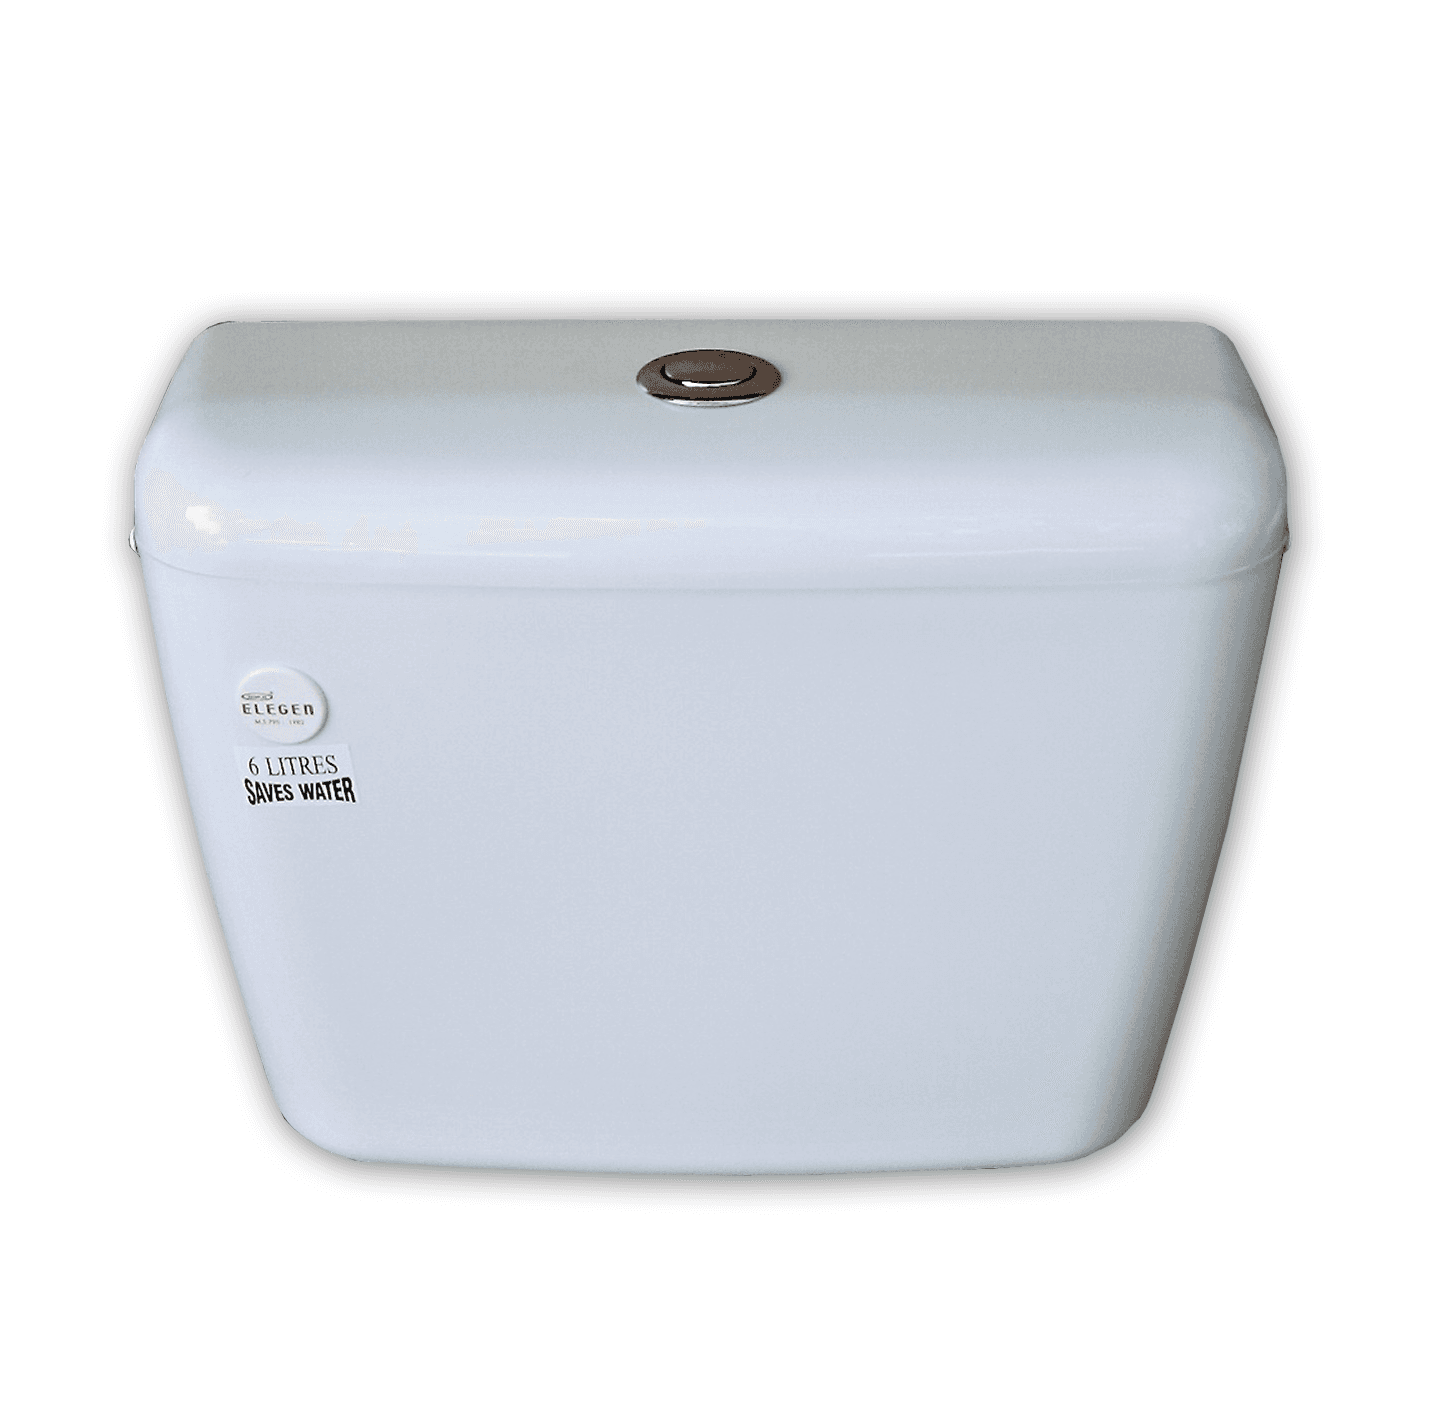 HUSKY 298 (Techplas Push Button Plastic Cistern)